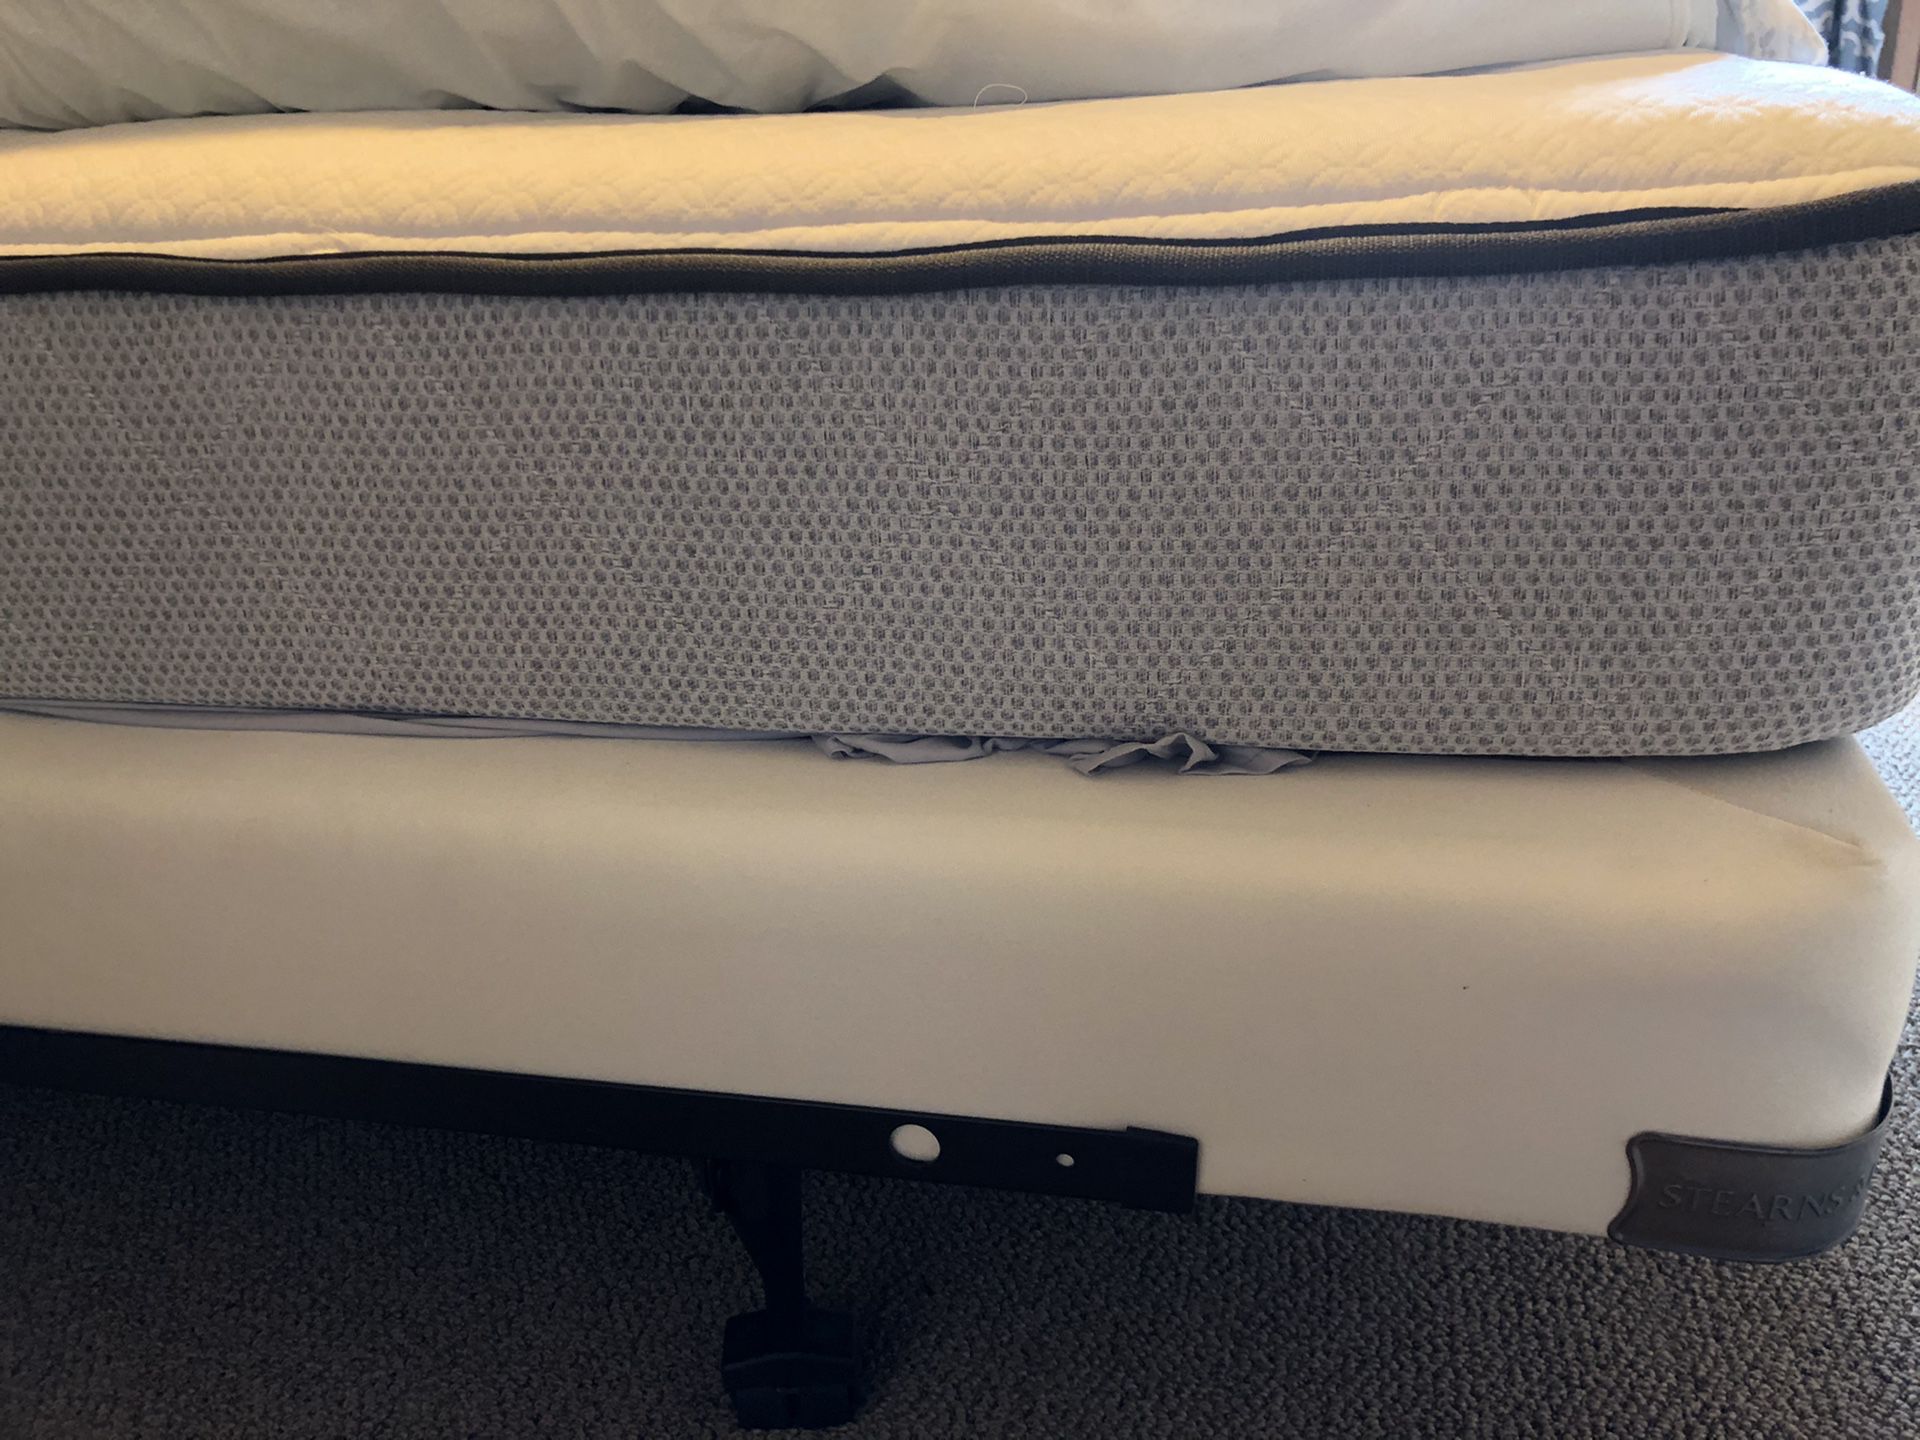 Sealy posturepedic mattress, box spring and metal frame